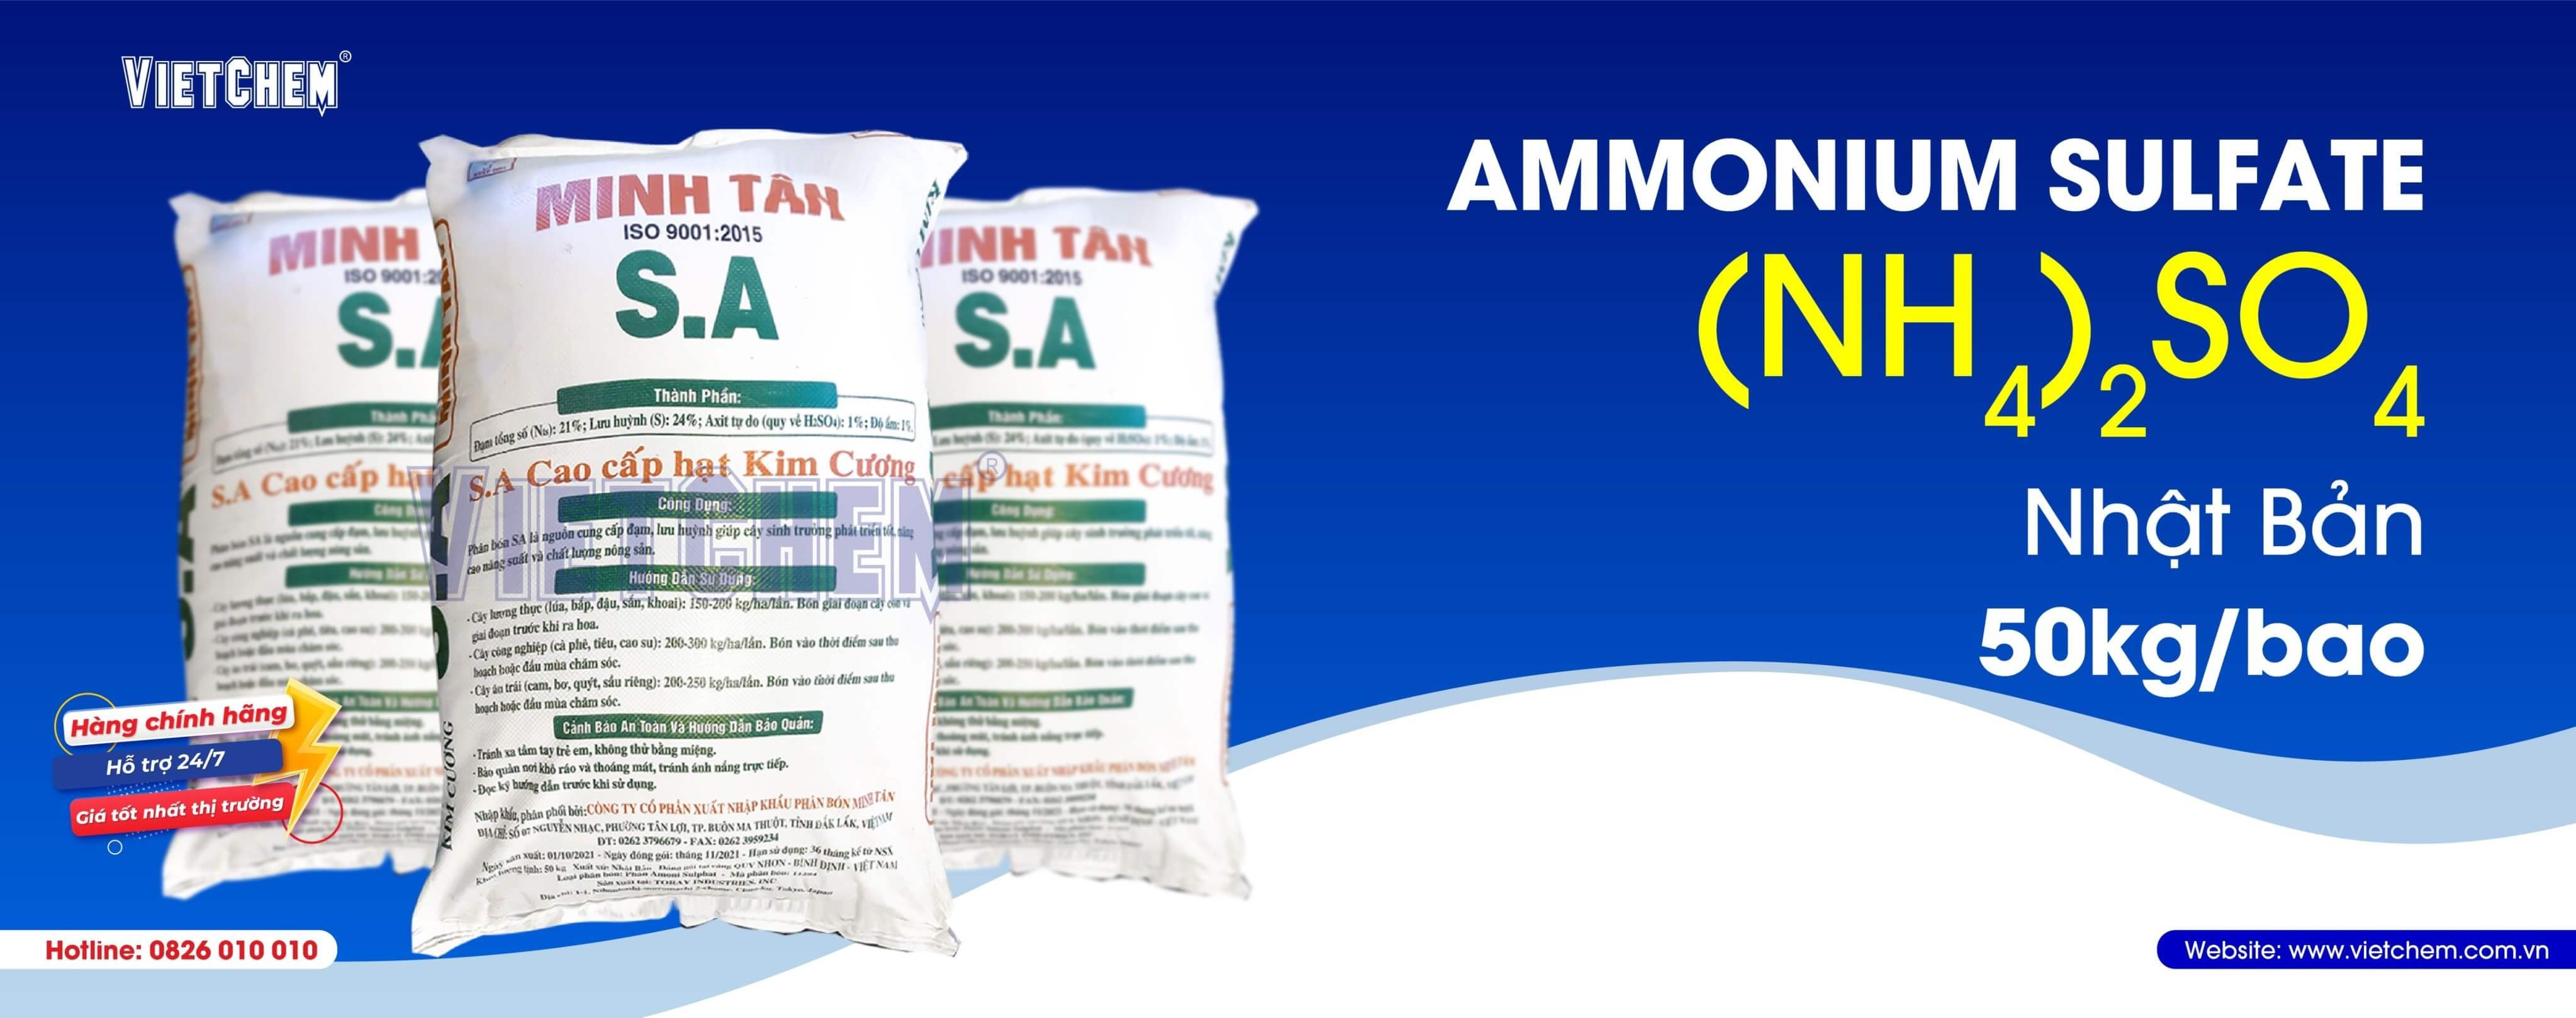 Ammonium sulfate (NH4)2SO4, Nhật Bản, 50kg/bao